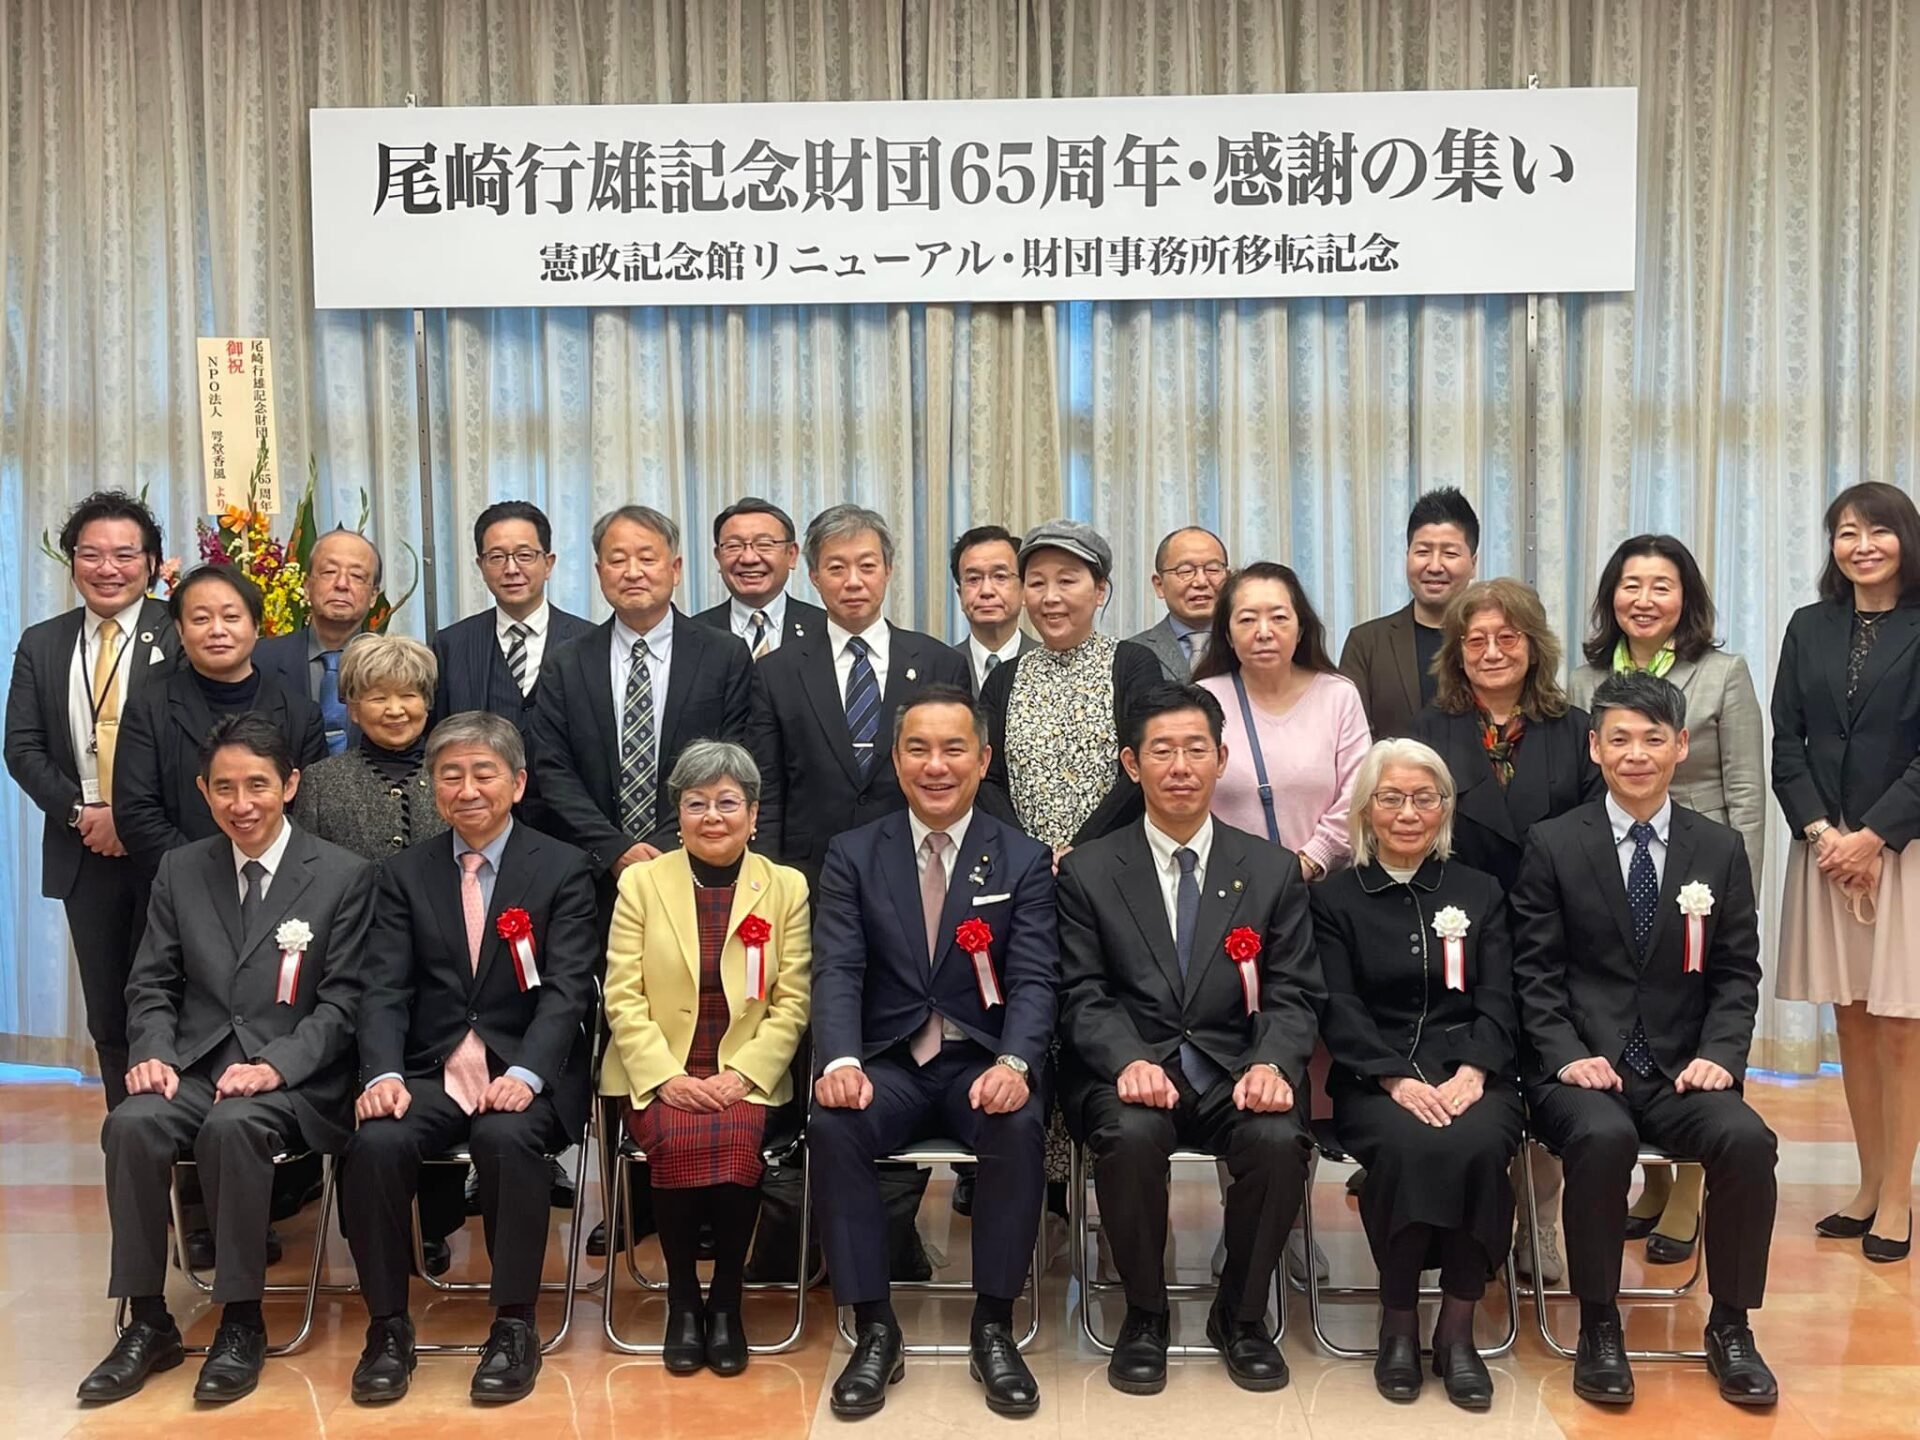 Ozaki Yukio memorial foundation’s 65th anniversary event